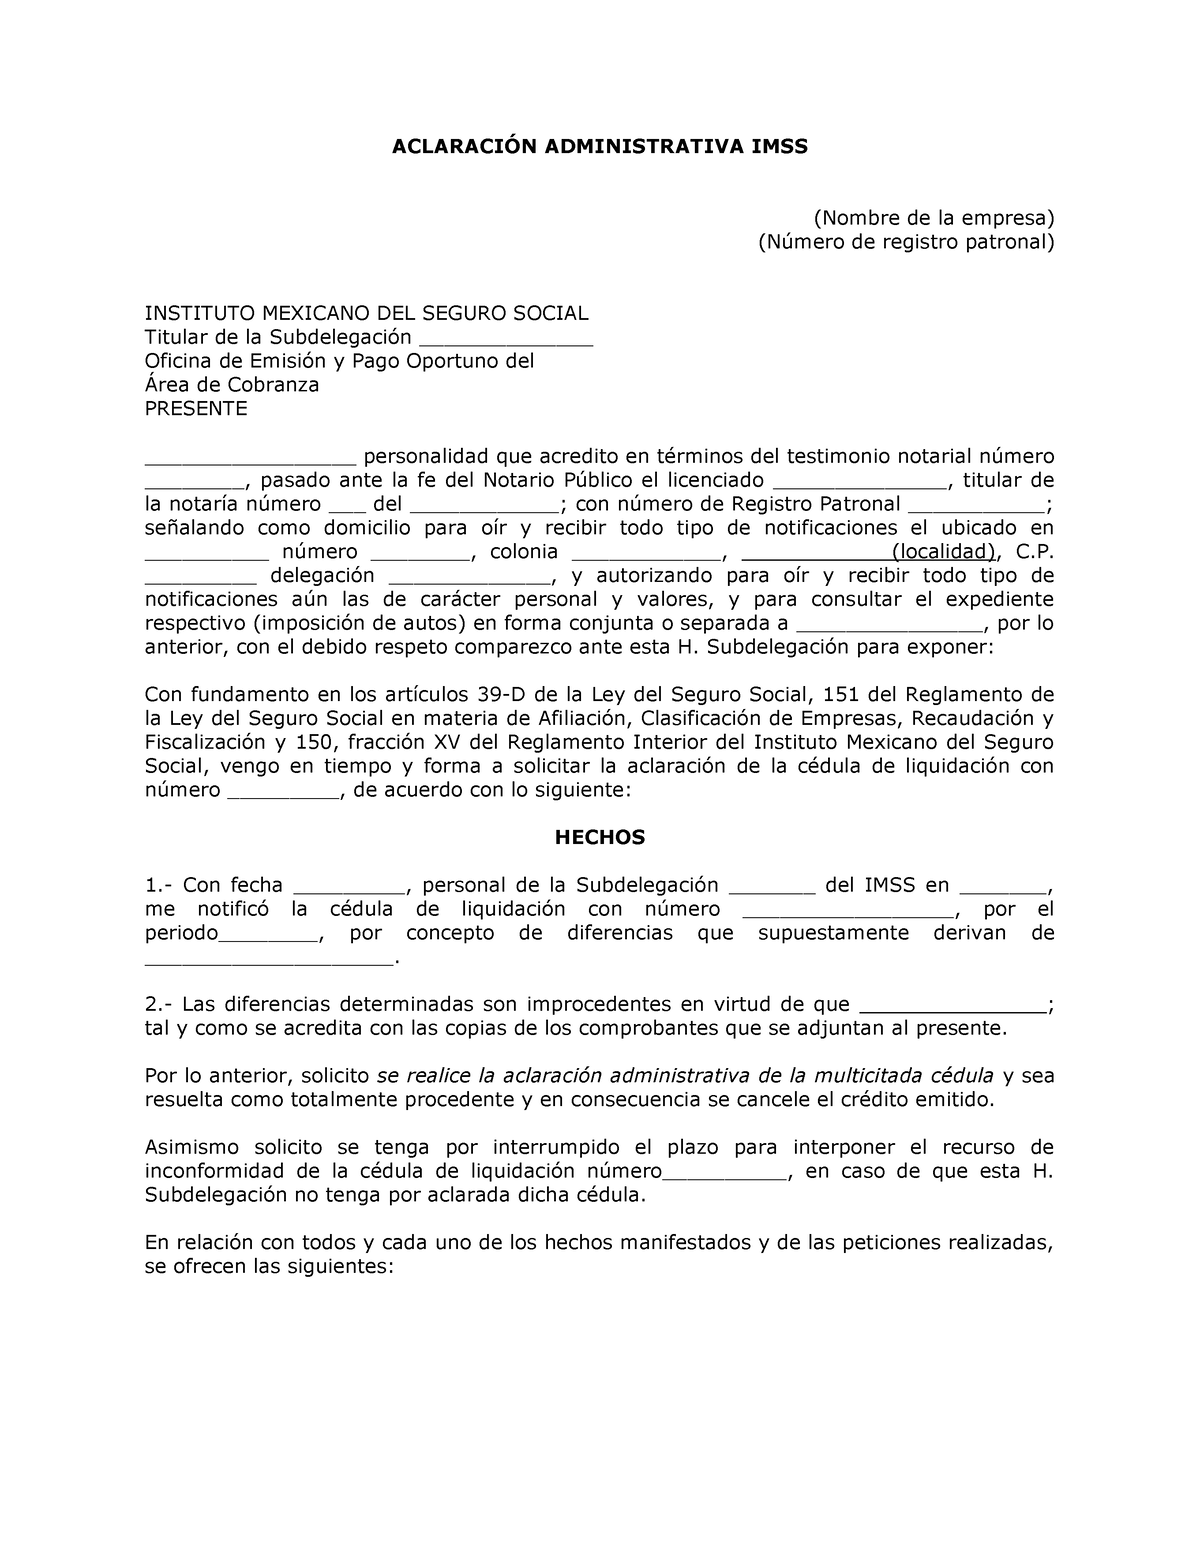 Aclaracin-administrativa-imss - ACLARACIÓN ADMINISTRATIVA IMSS (Nombre ...